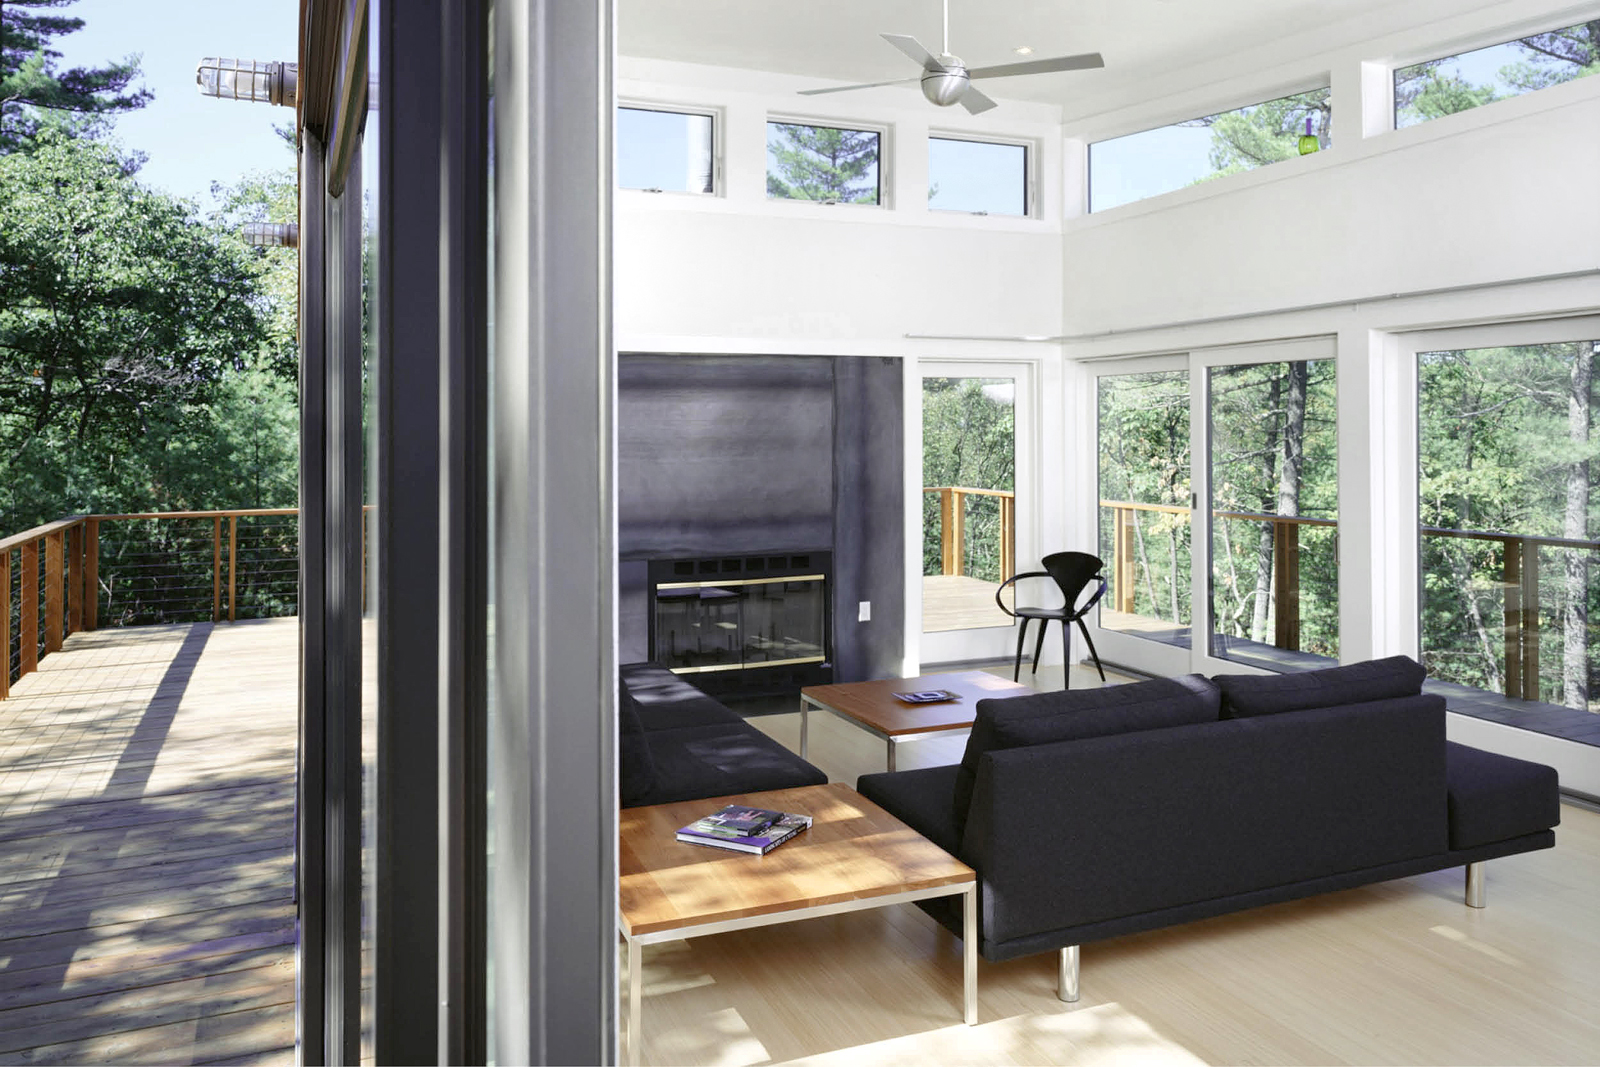 07-res4-resolution-4-architecture-modern-modular-home-prefab-house-mountain-retreat-interior-exterior.jpg